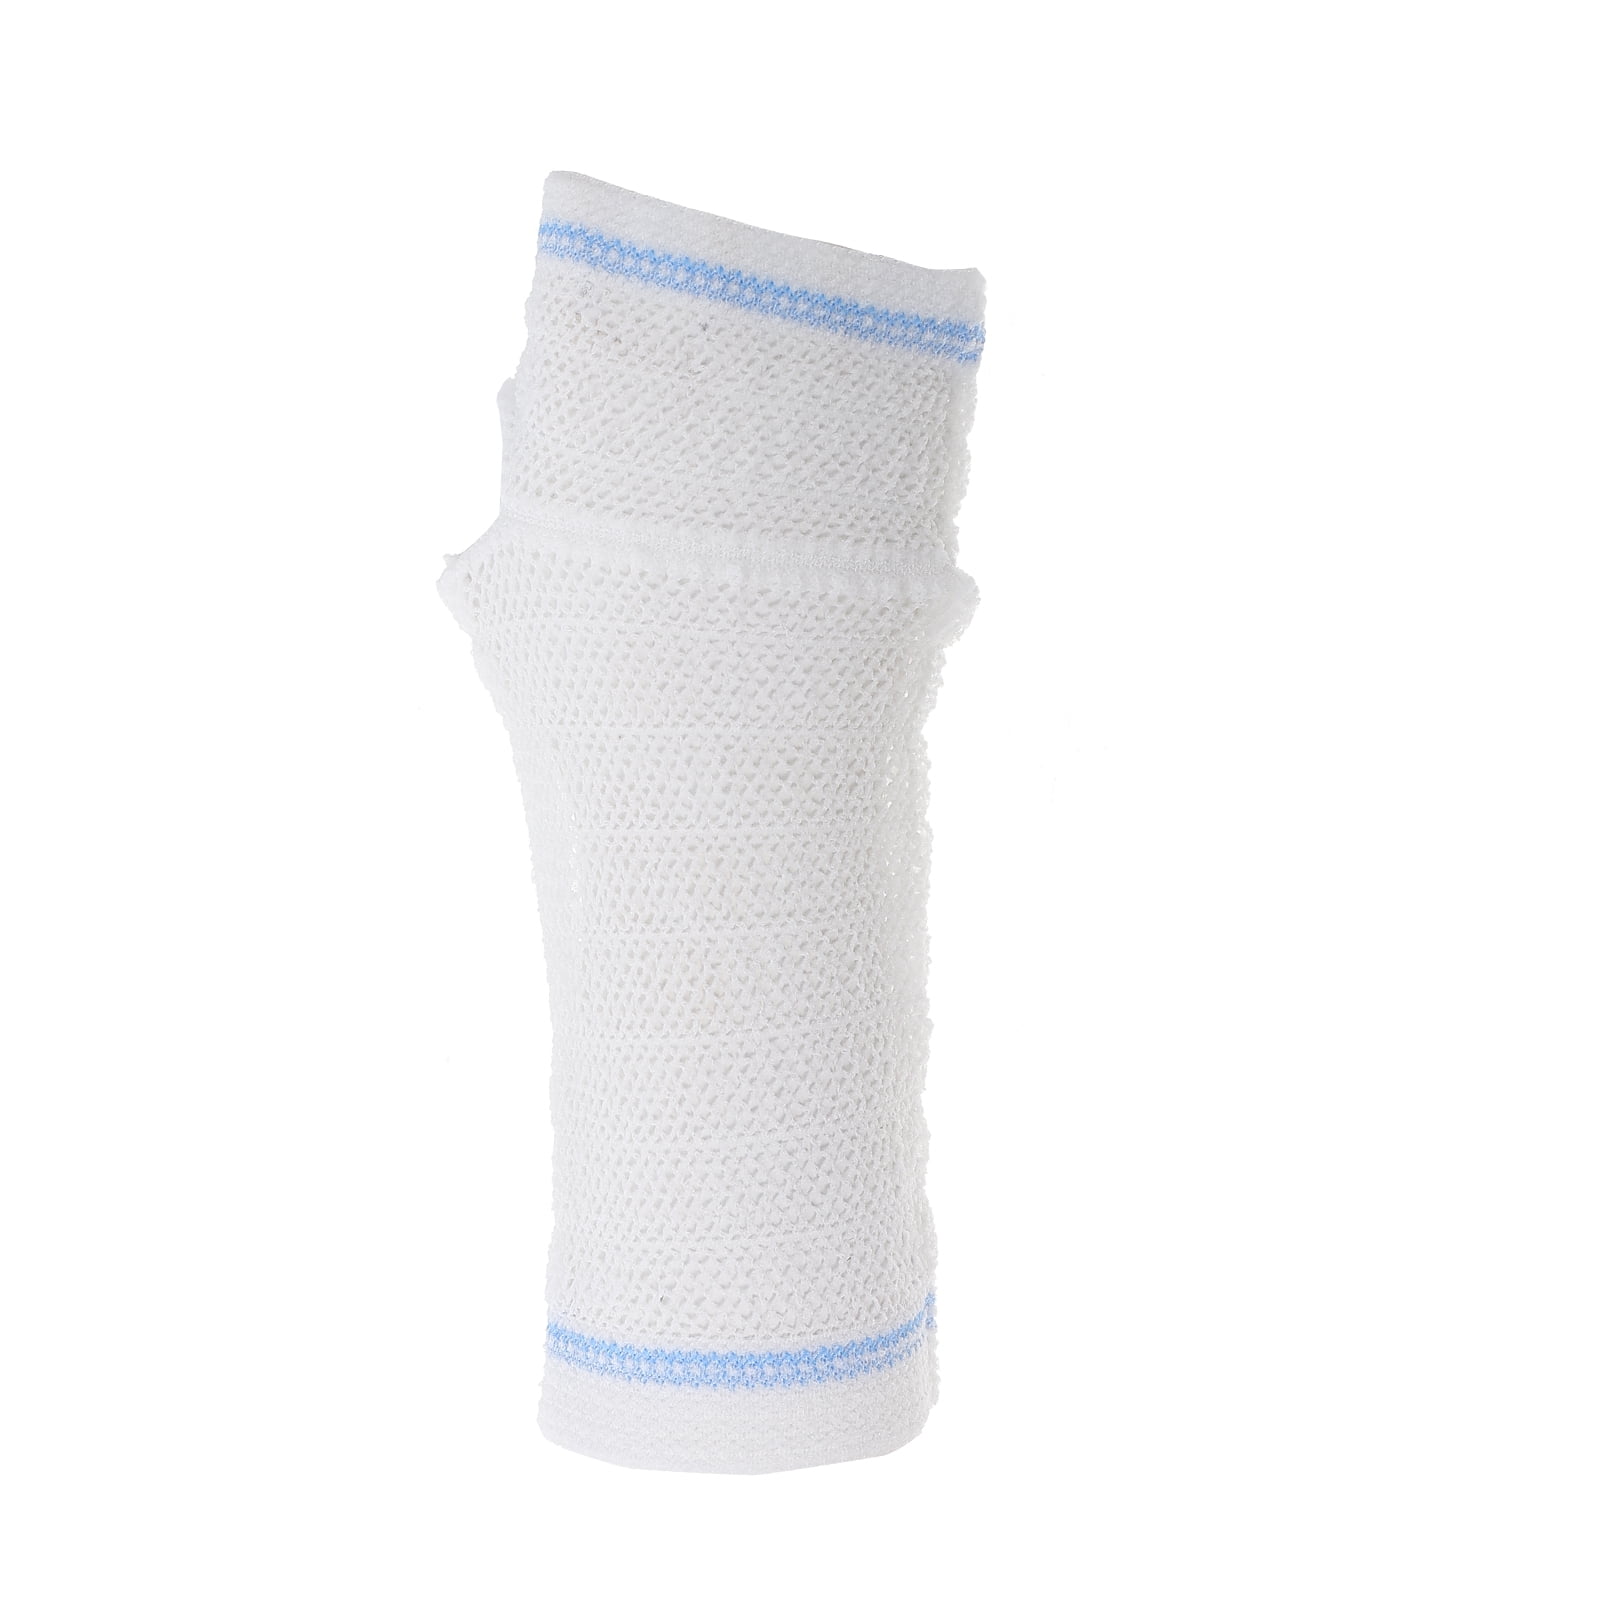 BESTONZON 1Pc Picc Protective Sleeve Arm Mesh Nursing Sleeve Elastic ...